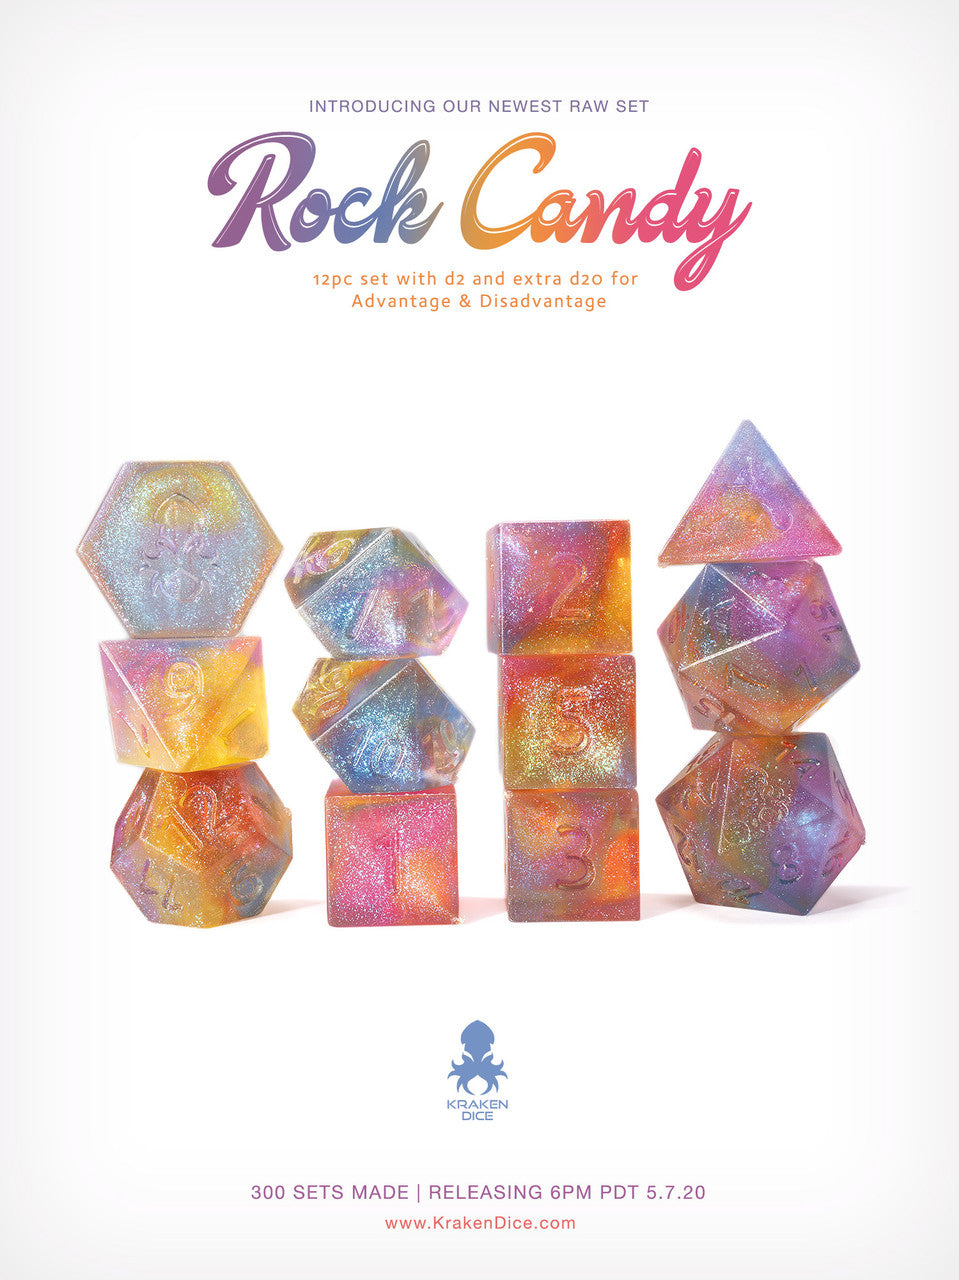 Kraken's Rock Candy RAW 12pc Polyhedral Dice Set